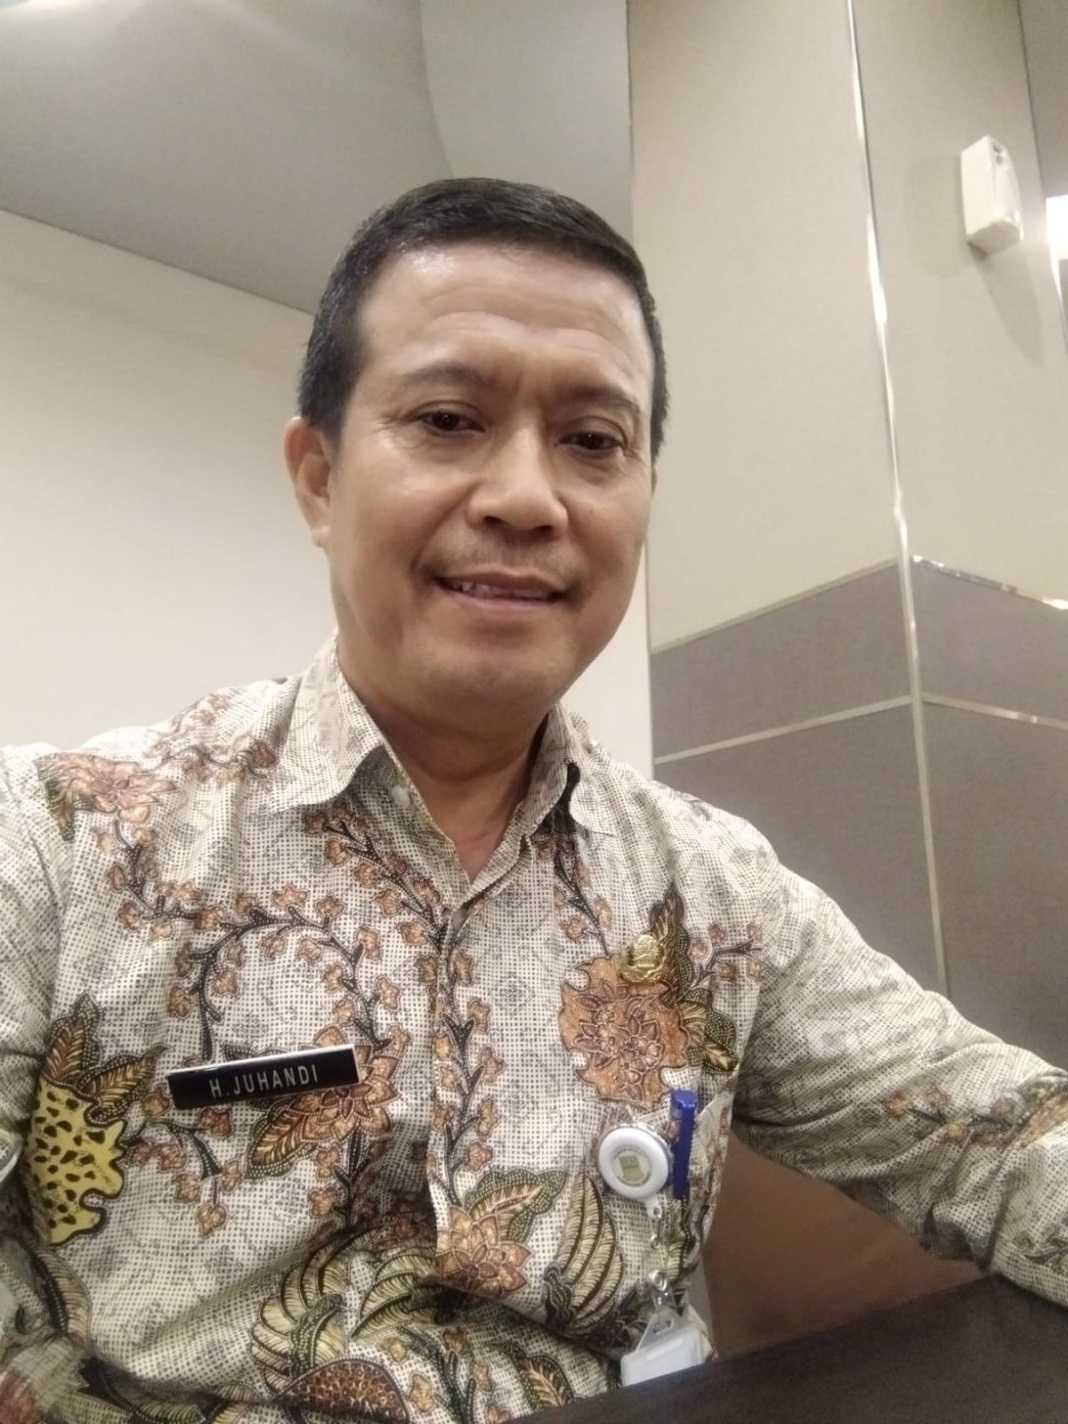 Inilah Profil Juhandi, Putra Daerah Yang Didorong FKMPB Lanjutkan Kepemimpinan Kabupaten Bekasi